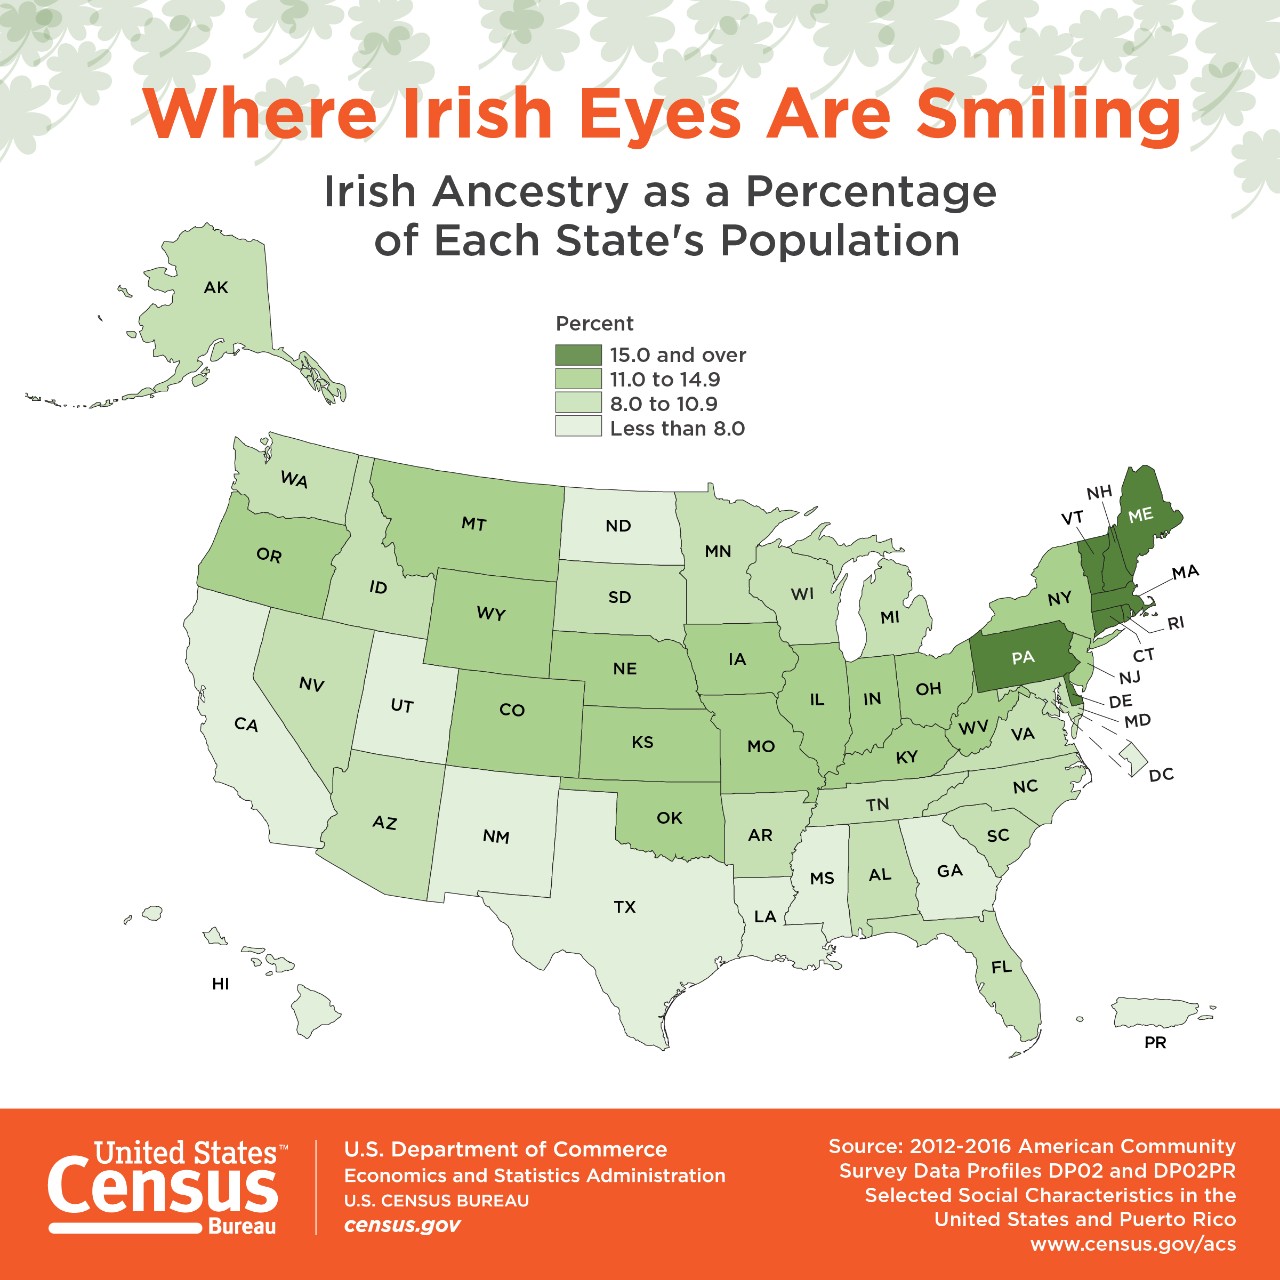 Where Irish Eyes are Smiling